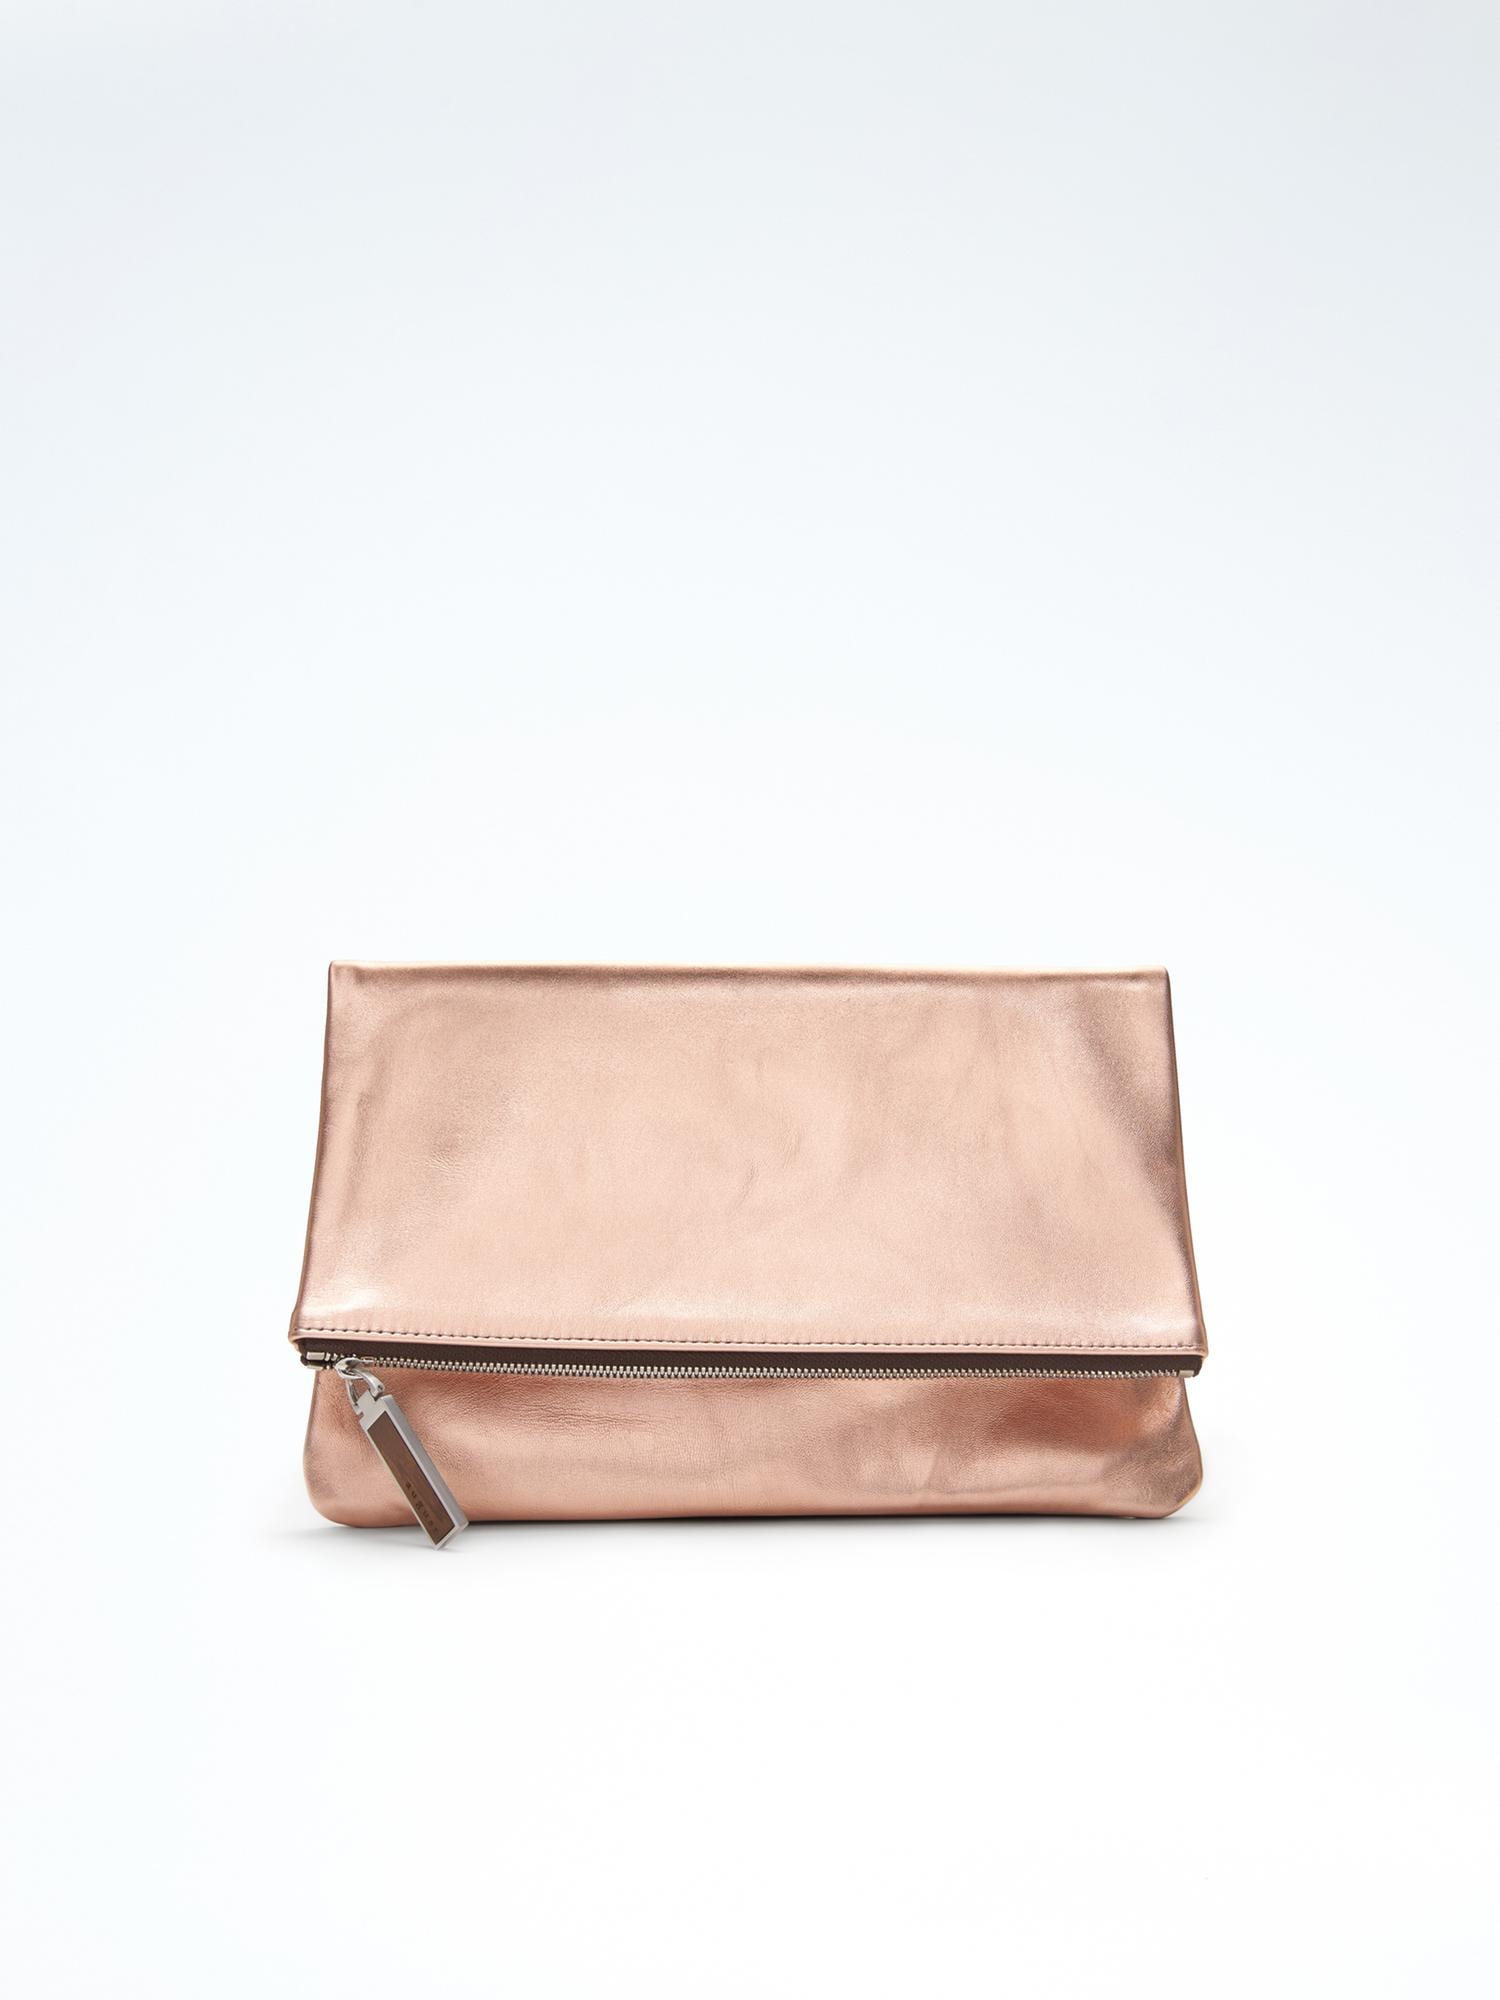 August Handbags &#124 Ravello Clutch